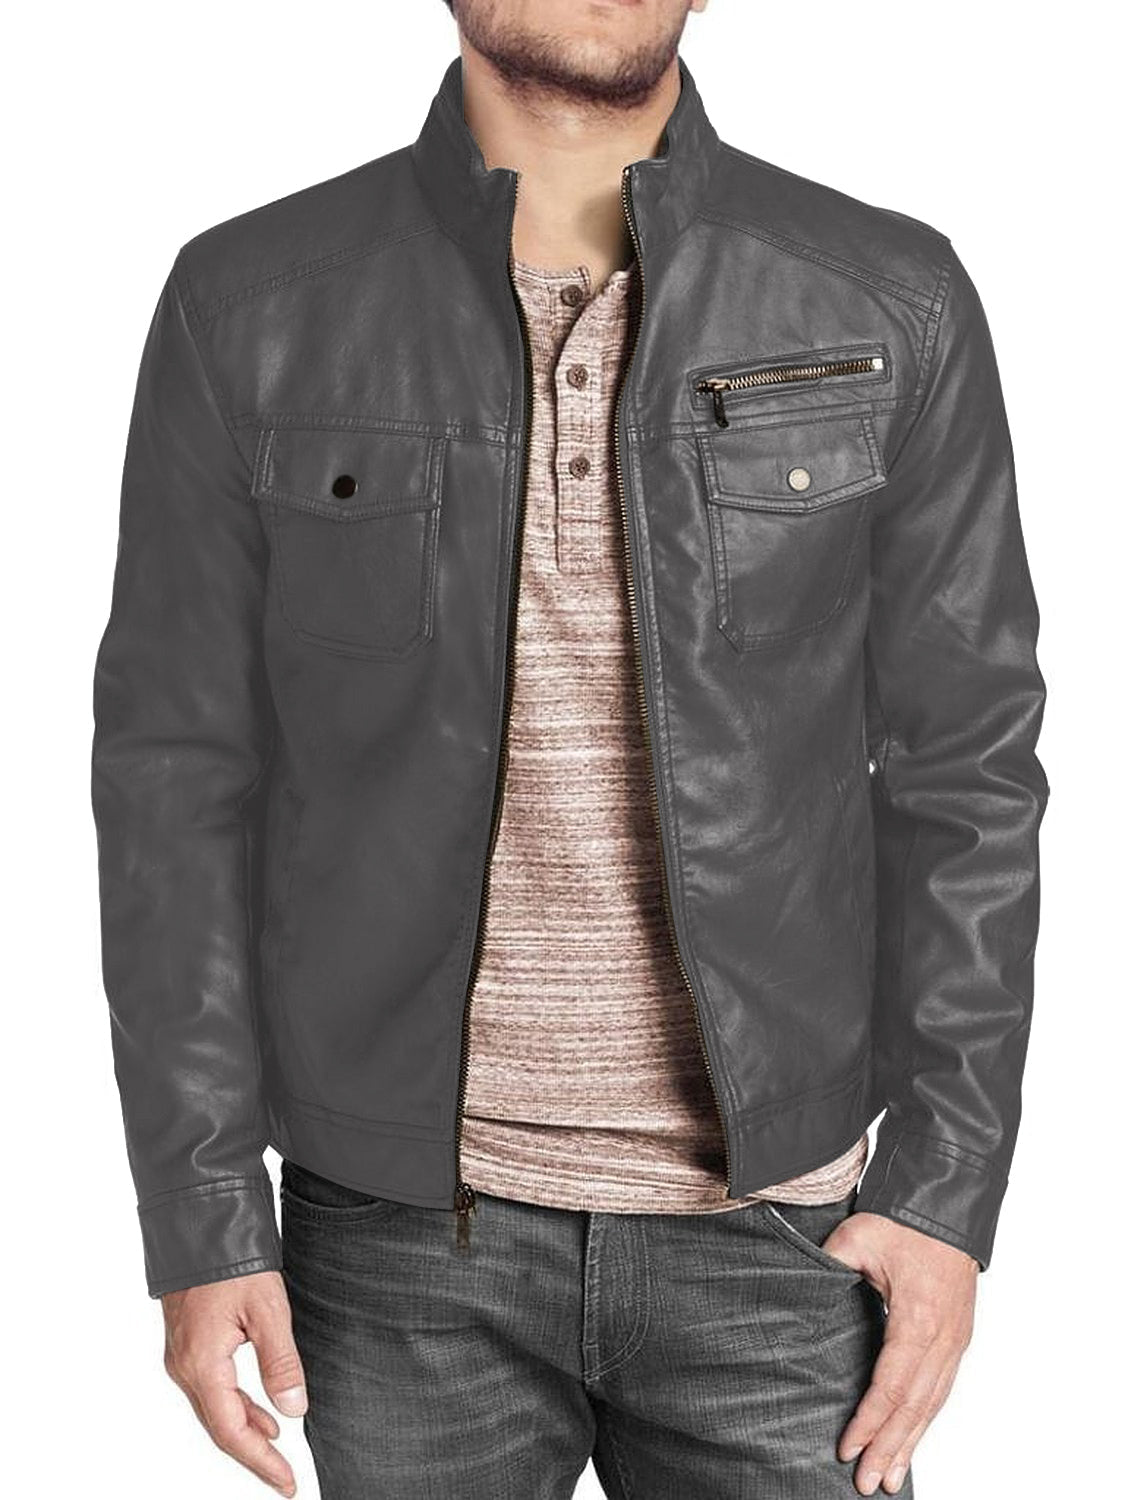 Leather Jackets Hub Mens Genuine Lambskin Leather Jacket (Black, Regal Jacket) - 1501332